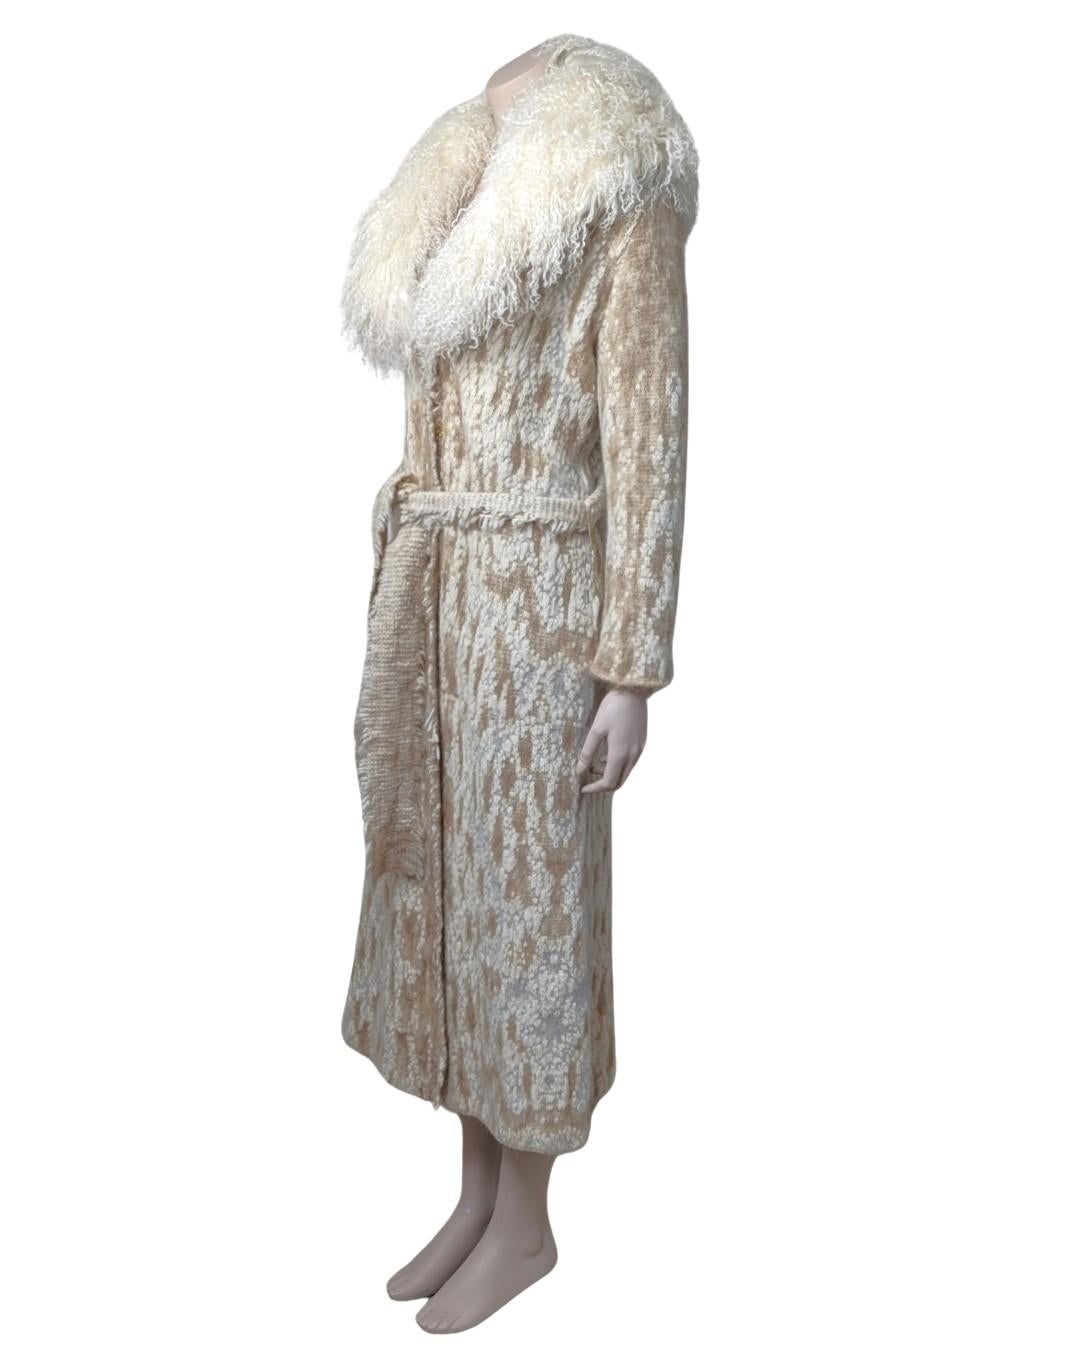 Roberto Cavalli Penny lane wool coat - Class line.

. Knit mix of fabrics cream tan and grey
. Mongolian voluminous fur collar

Fits XS, S 

Flat measurements : ( slightly stretch fabric )

Pit to Pit : 52 cm
Breast : 50 cm
Waist : 42 cm
Hips : 53